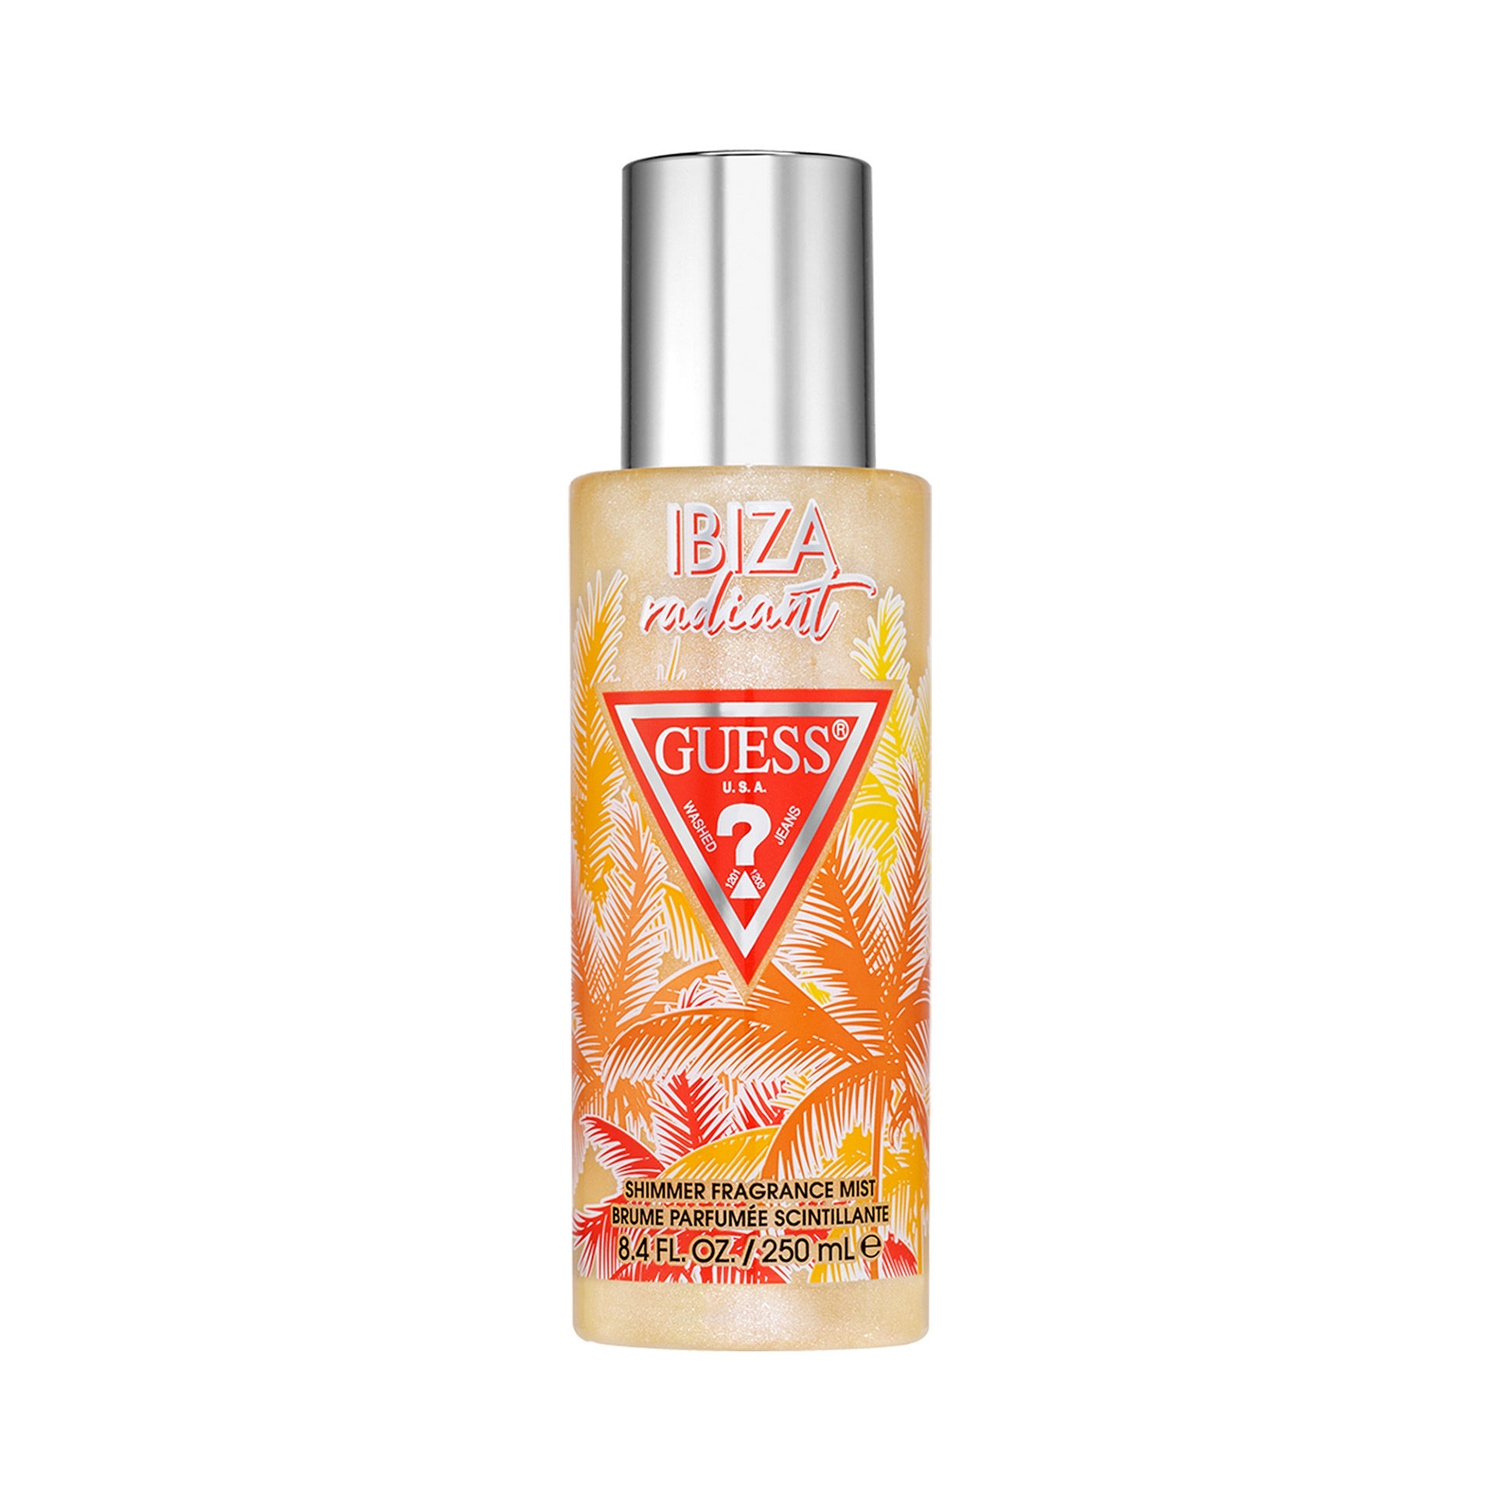 Guess Destination Ibiza Radiant Shimmer Fragrance Body Mist (250ml)